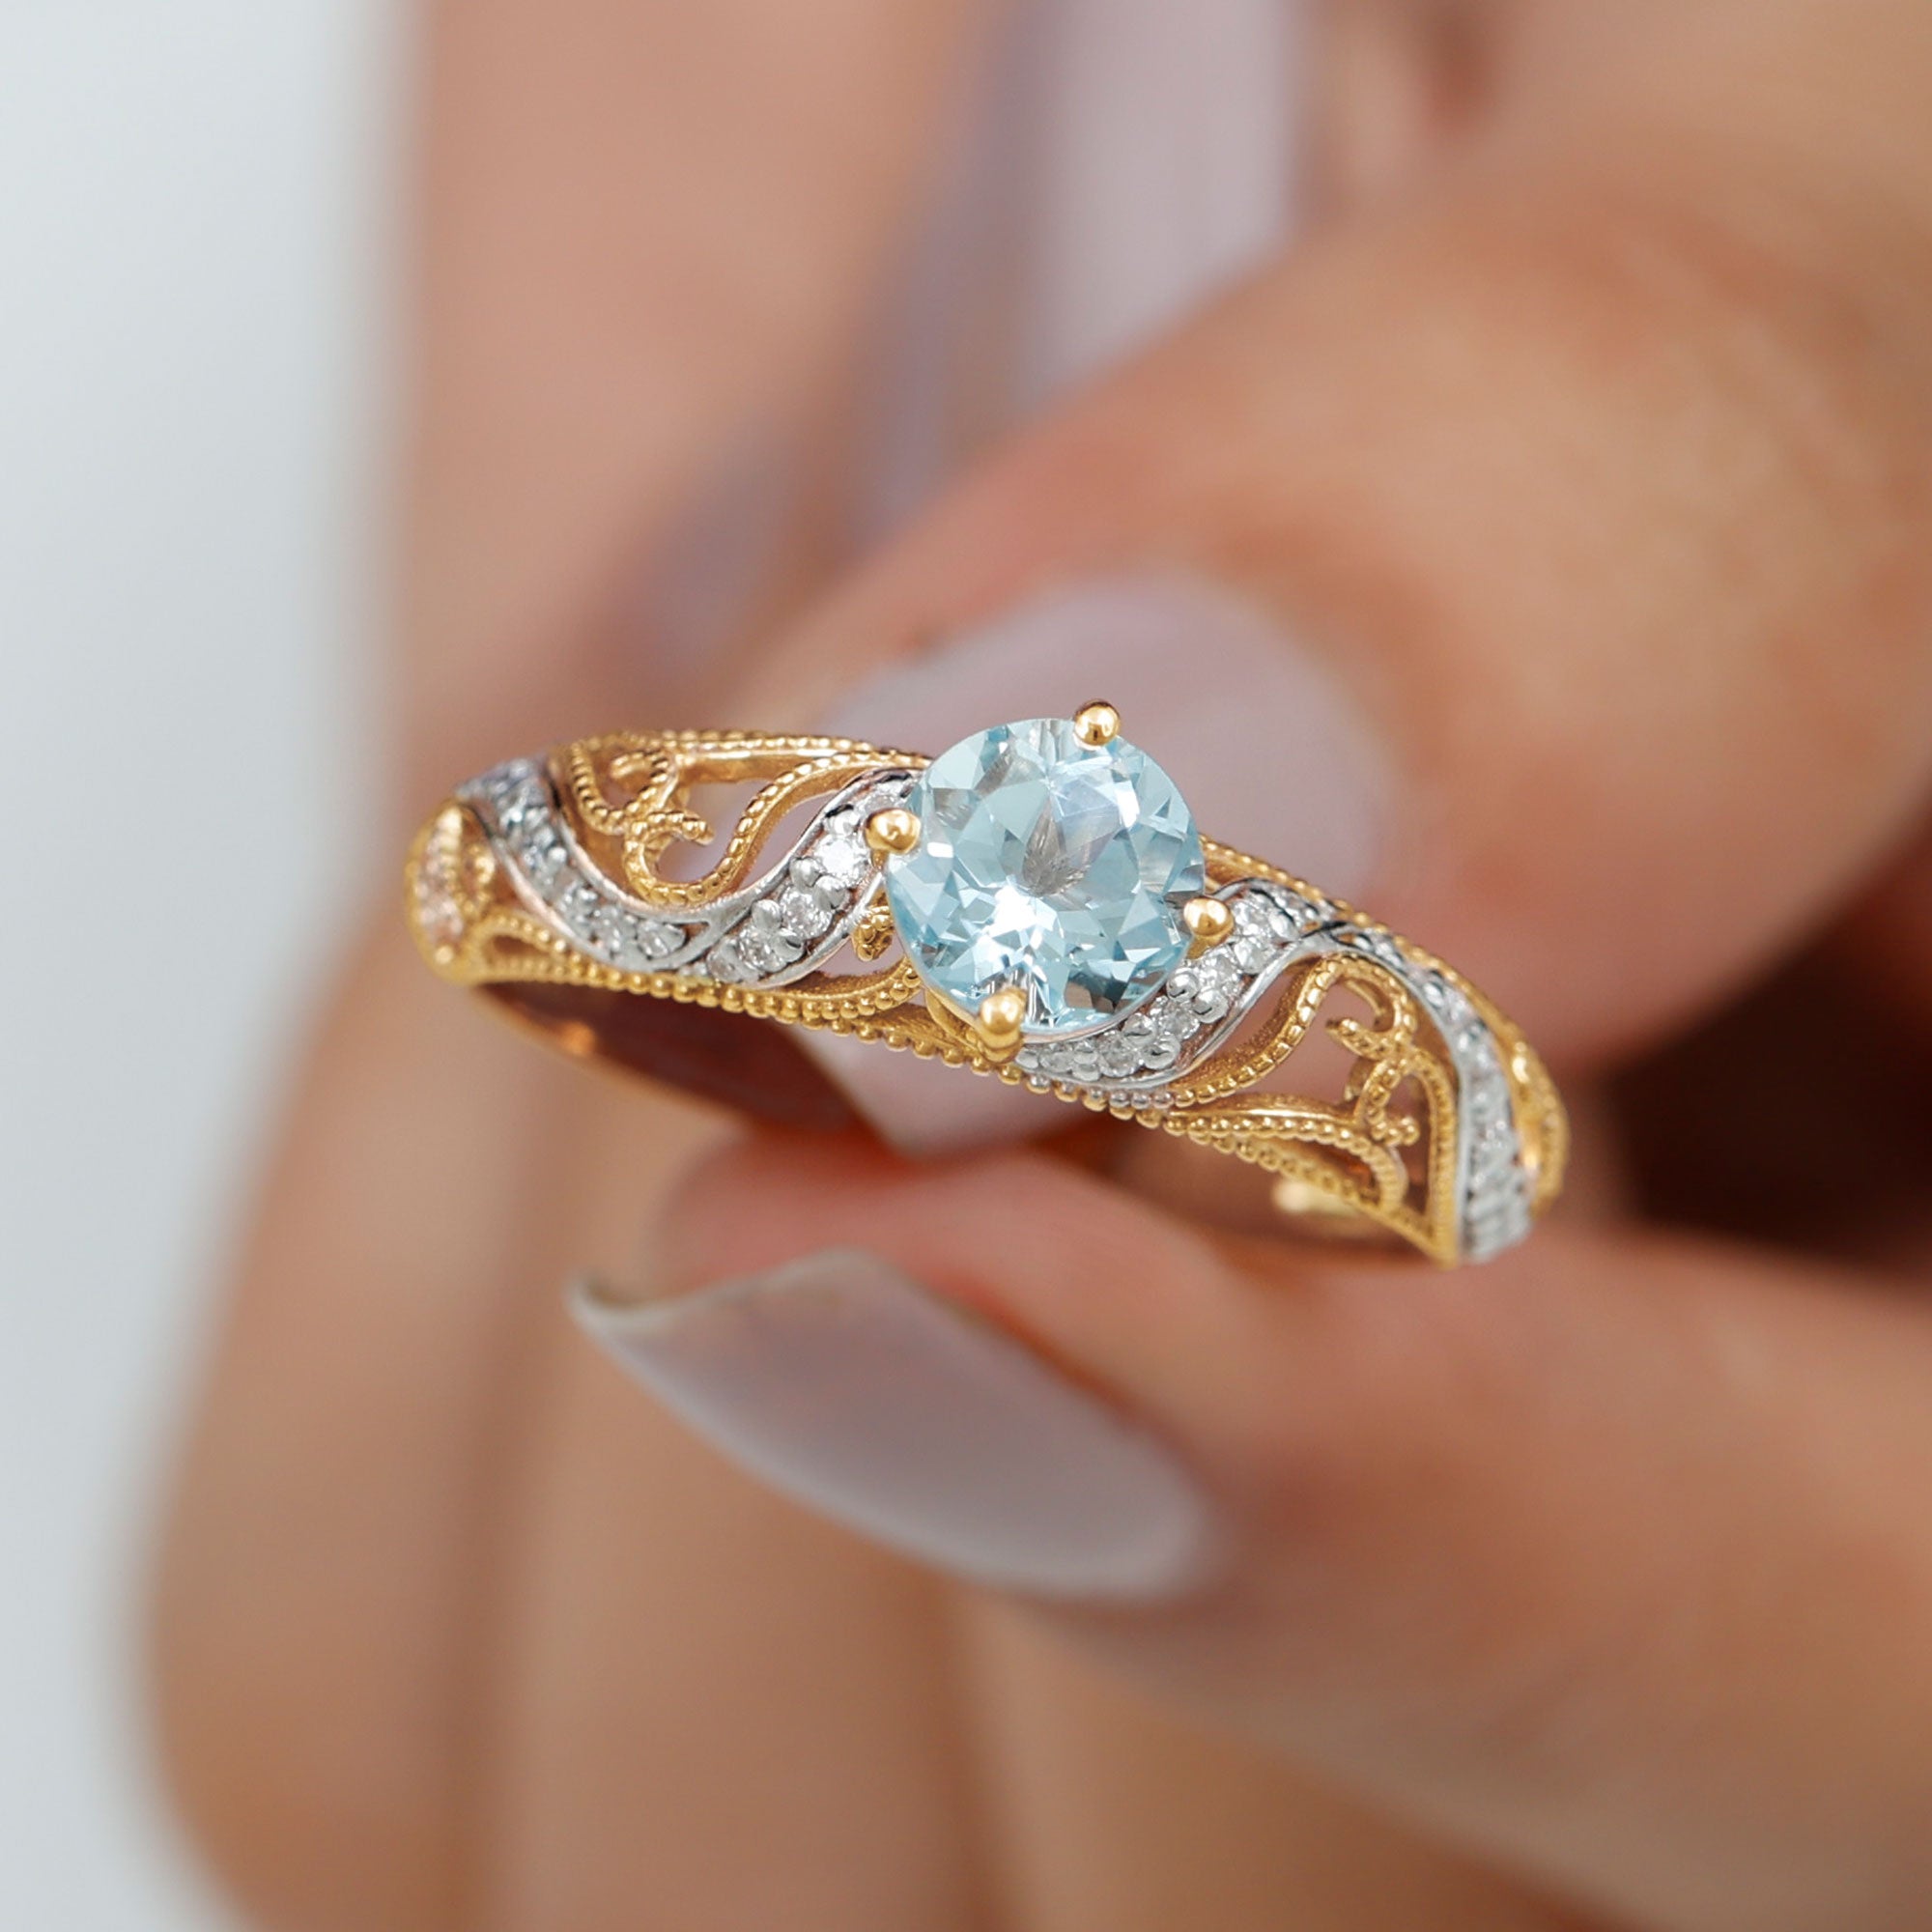 1 CT Vintage Engagement Ring with Aquamarine and Diamond Aquamarine - ( AAA ) - Quality - Rosec Jewels